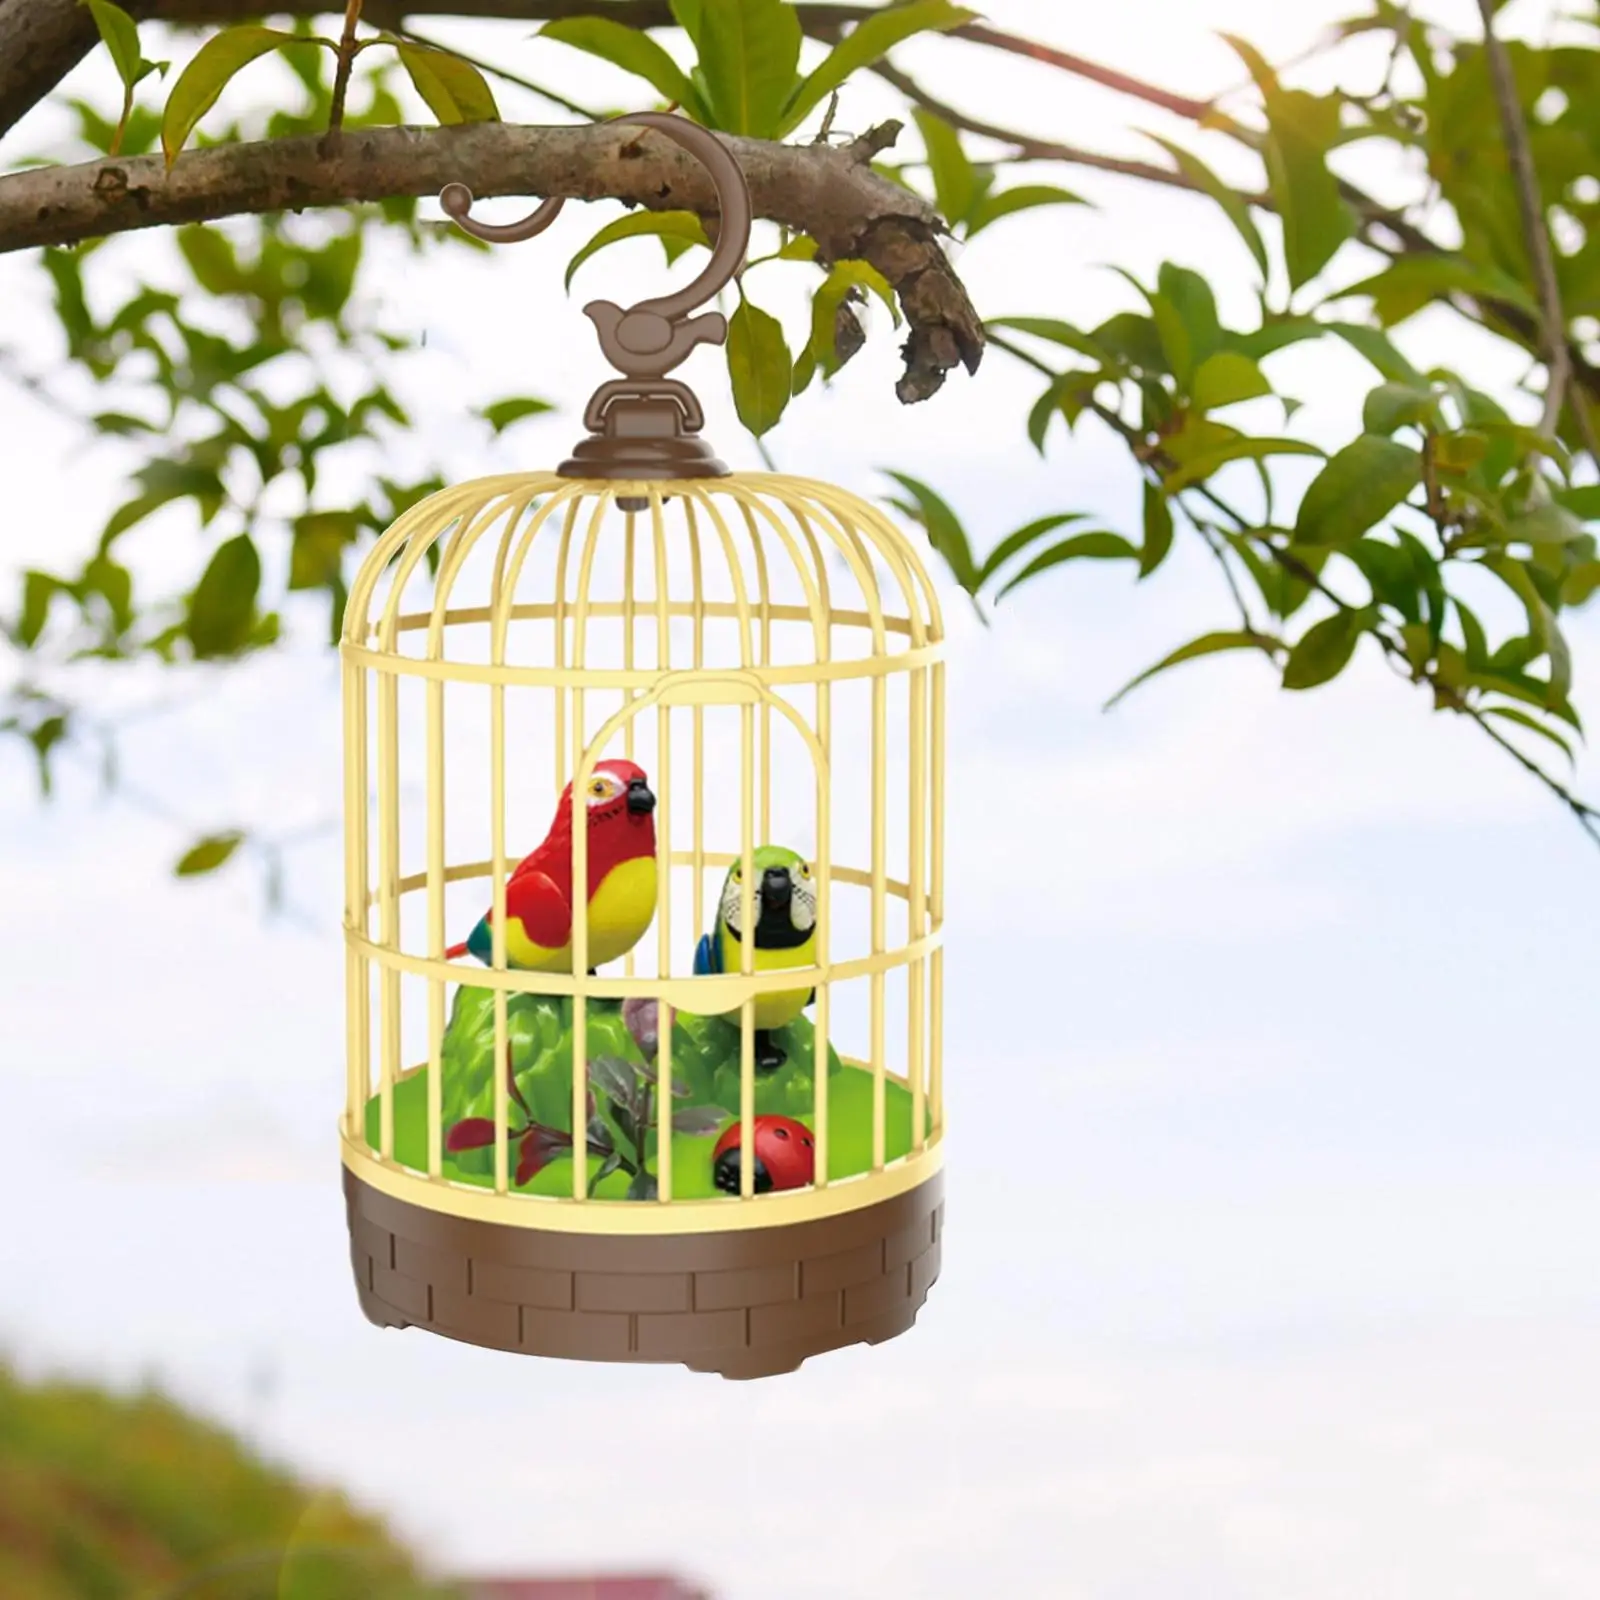 Chirp Toy  Electronic Singing Sounds Parakeet Imitation Educational Sensor  Chirping  Bird for Children baby